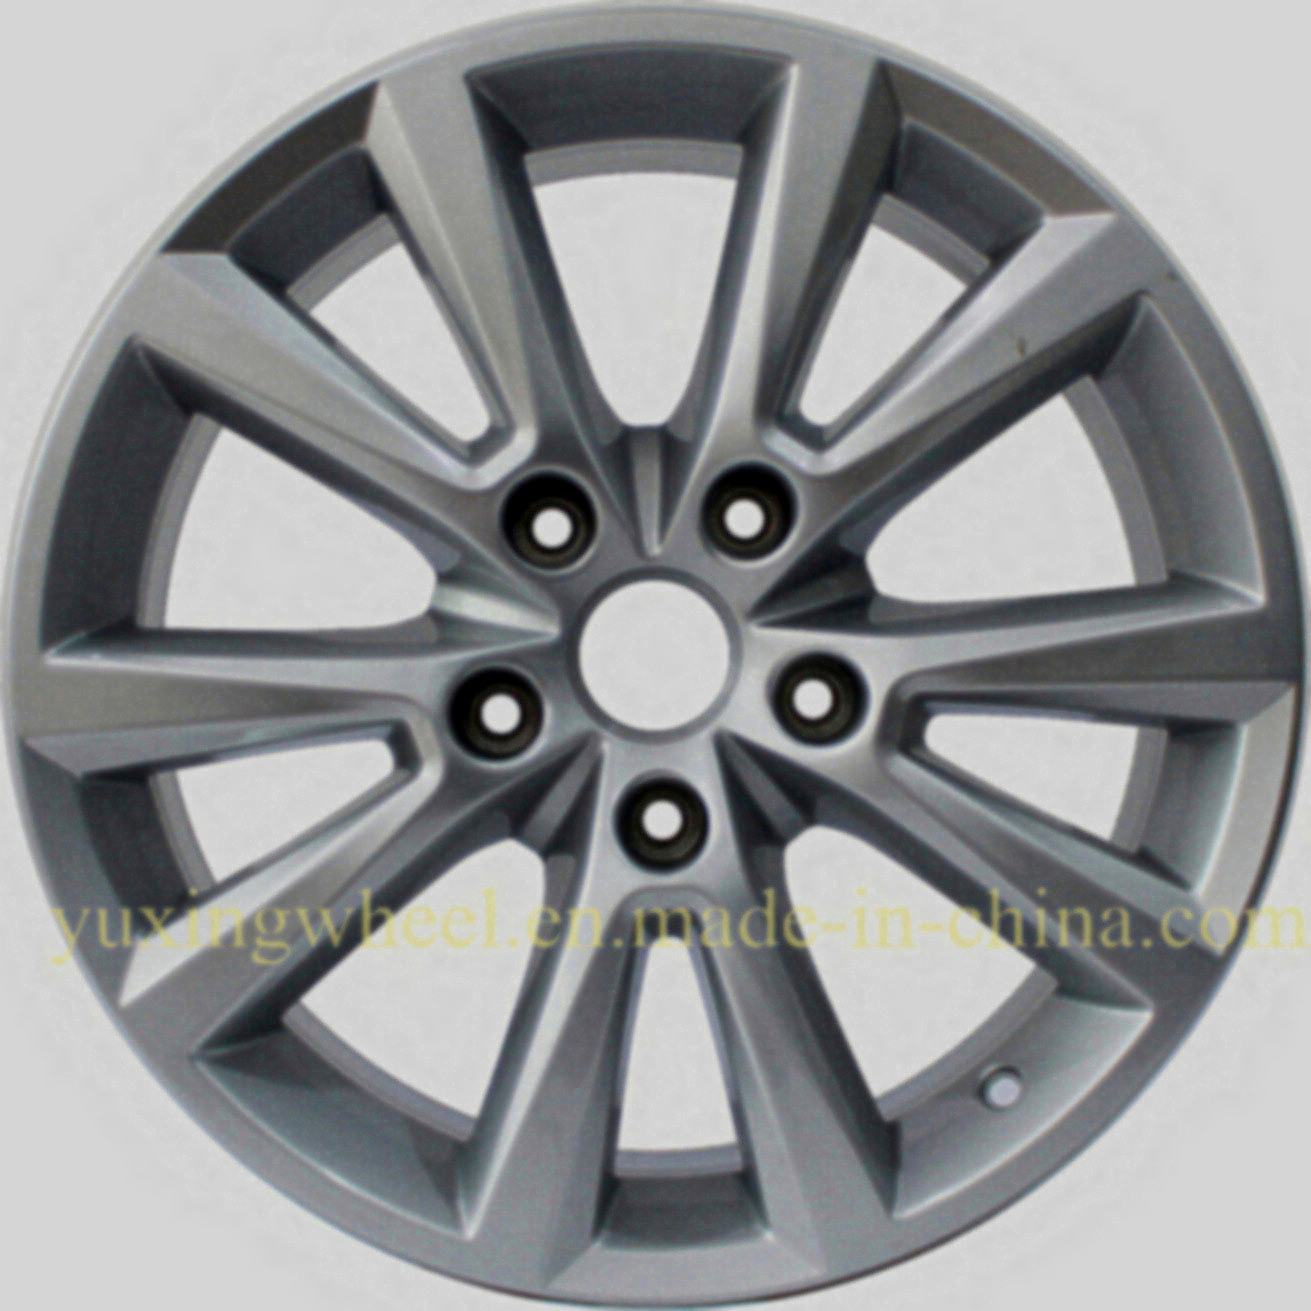 Aftermarket Alloy Wheel Rims for Volkswagen